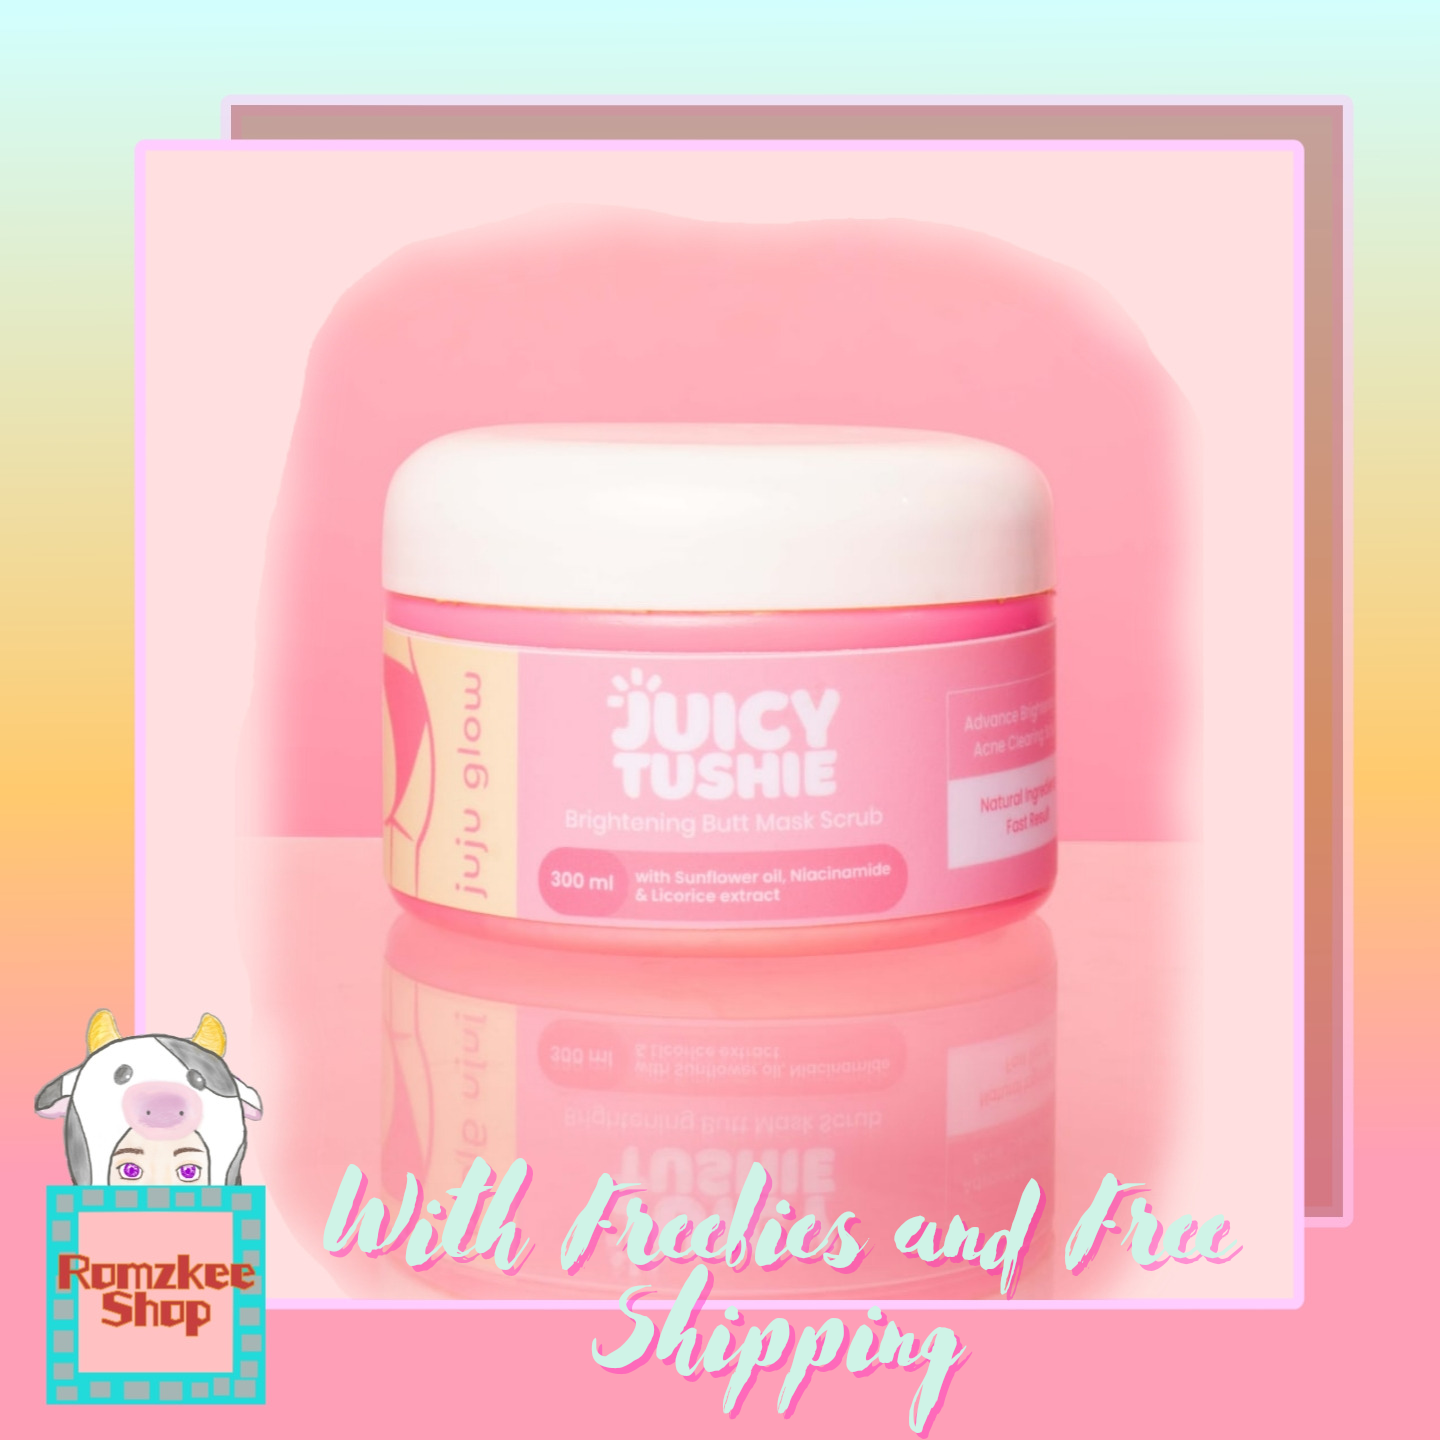 JUICY TUSHIE Brightening Butt Mask Scrub 300 ml by Juju Glow with 